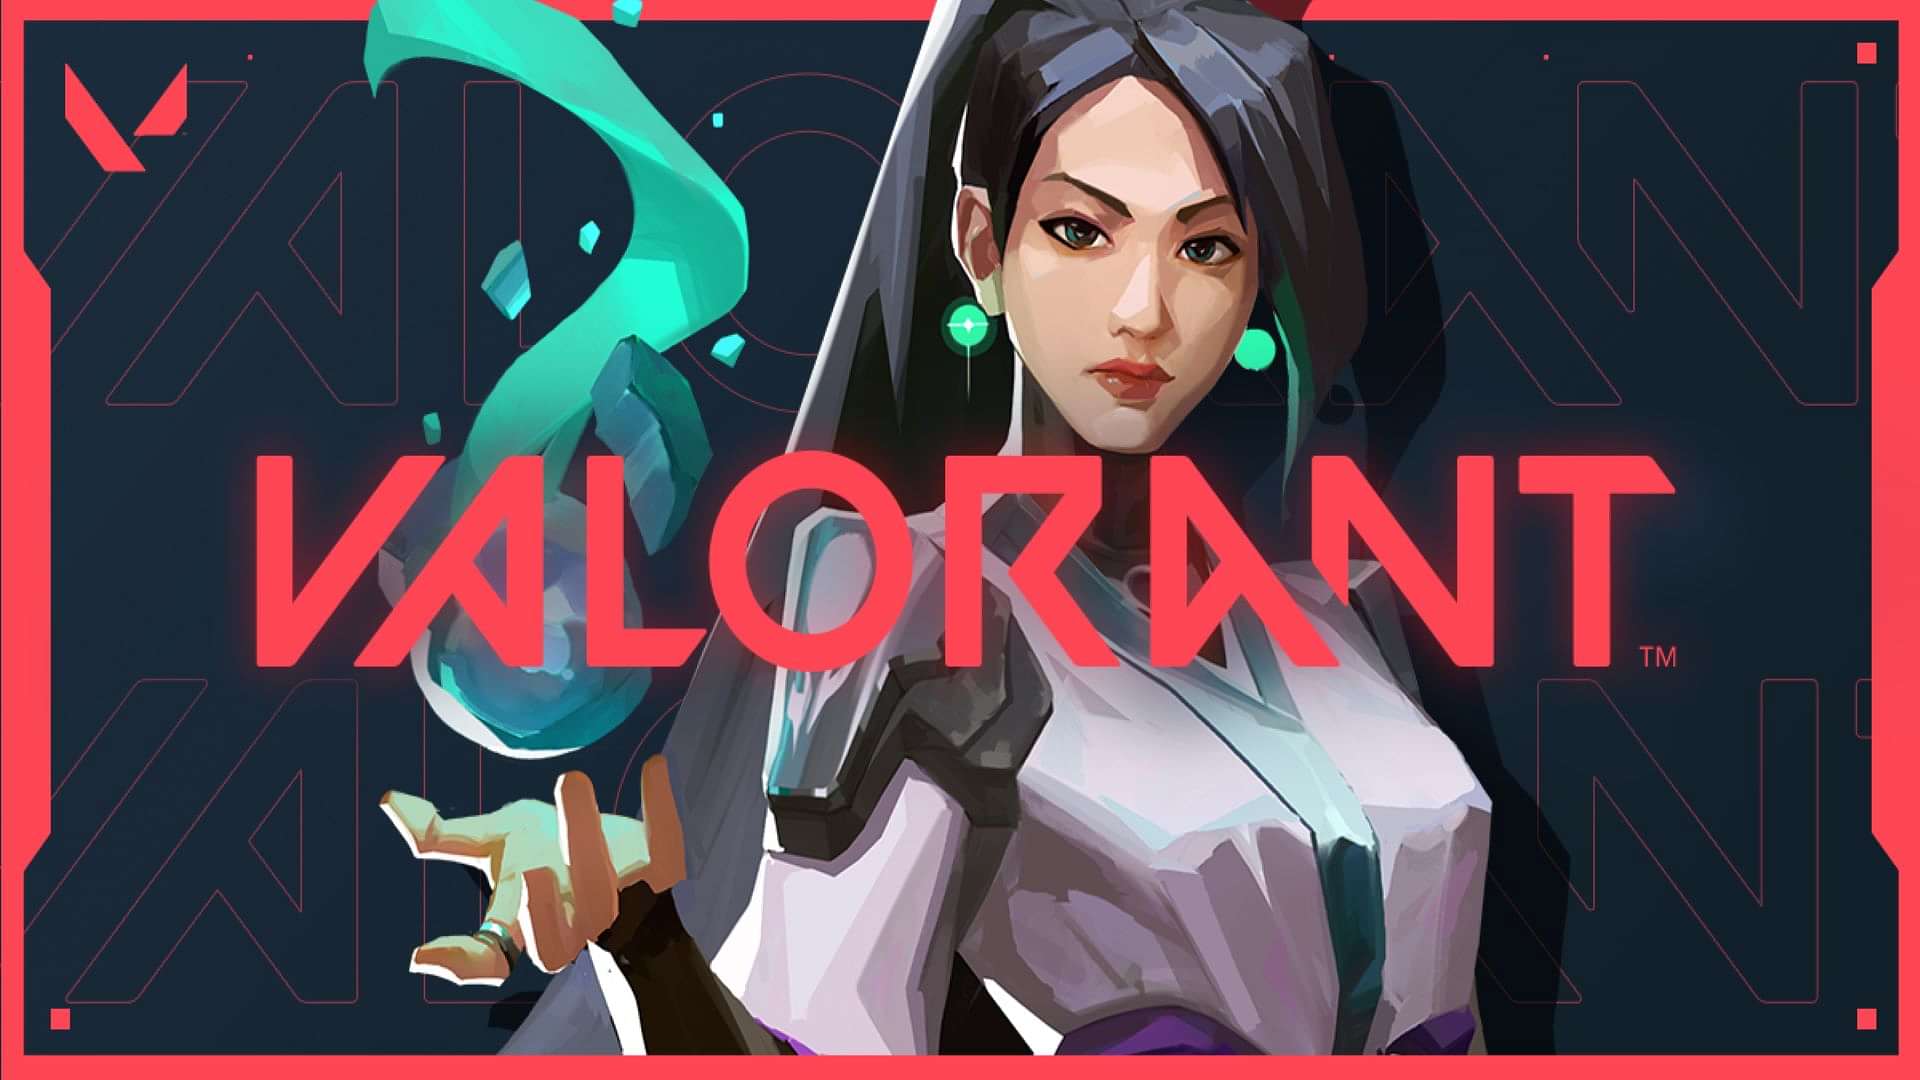 HD wallpaper: Valorant, Sage (valorant), Riot Games